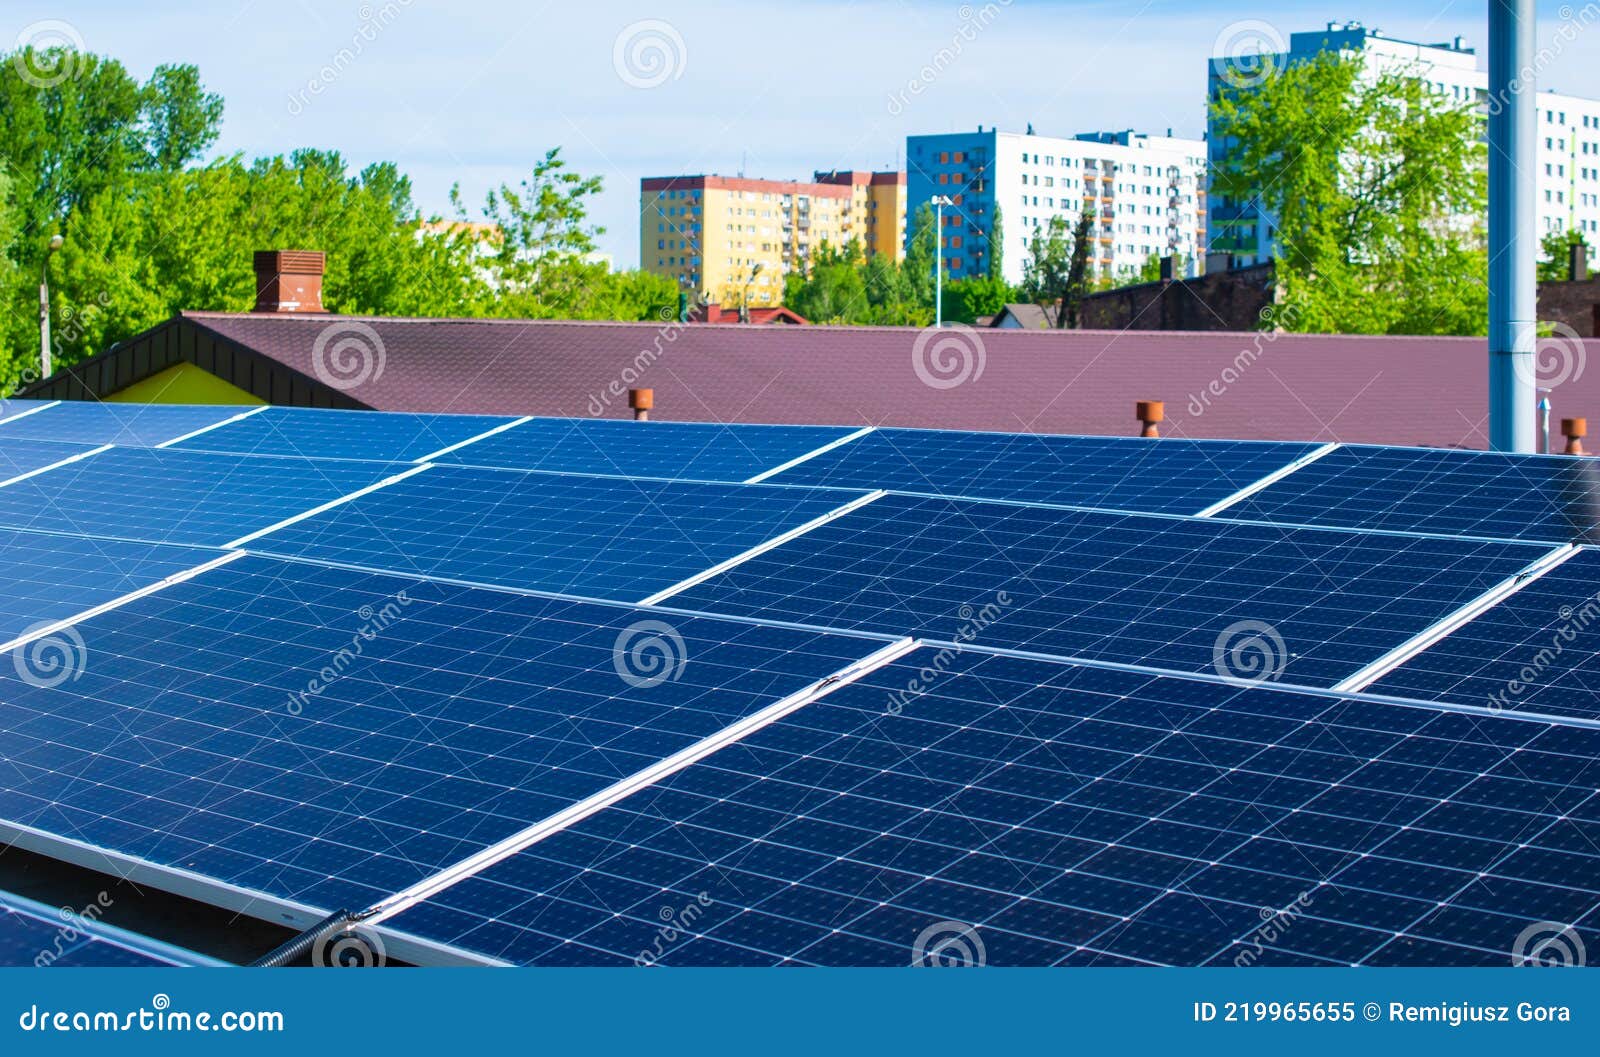 Green Energy Solar Panels Reviews